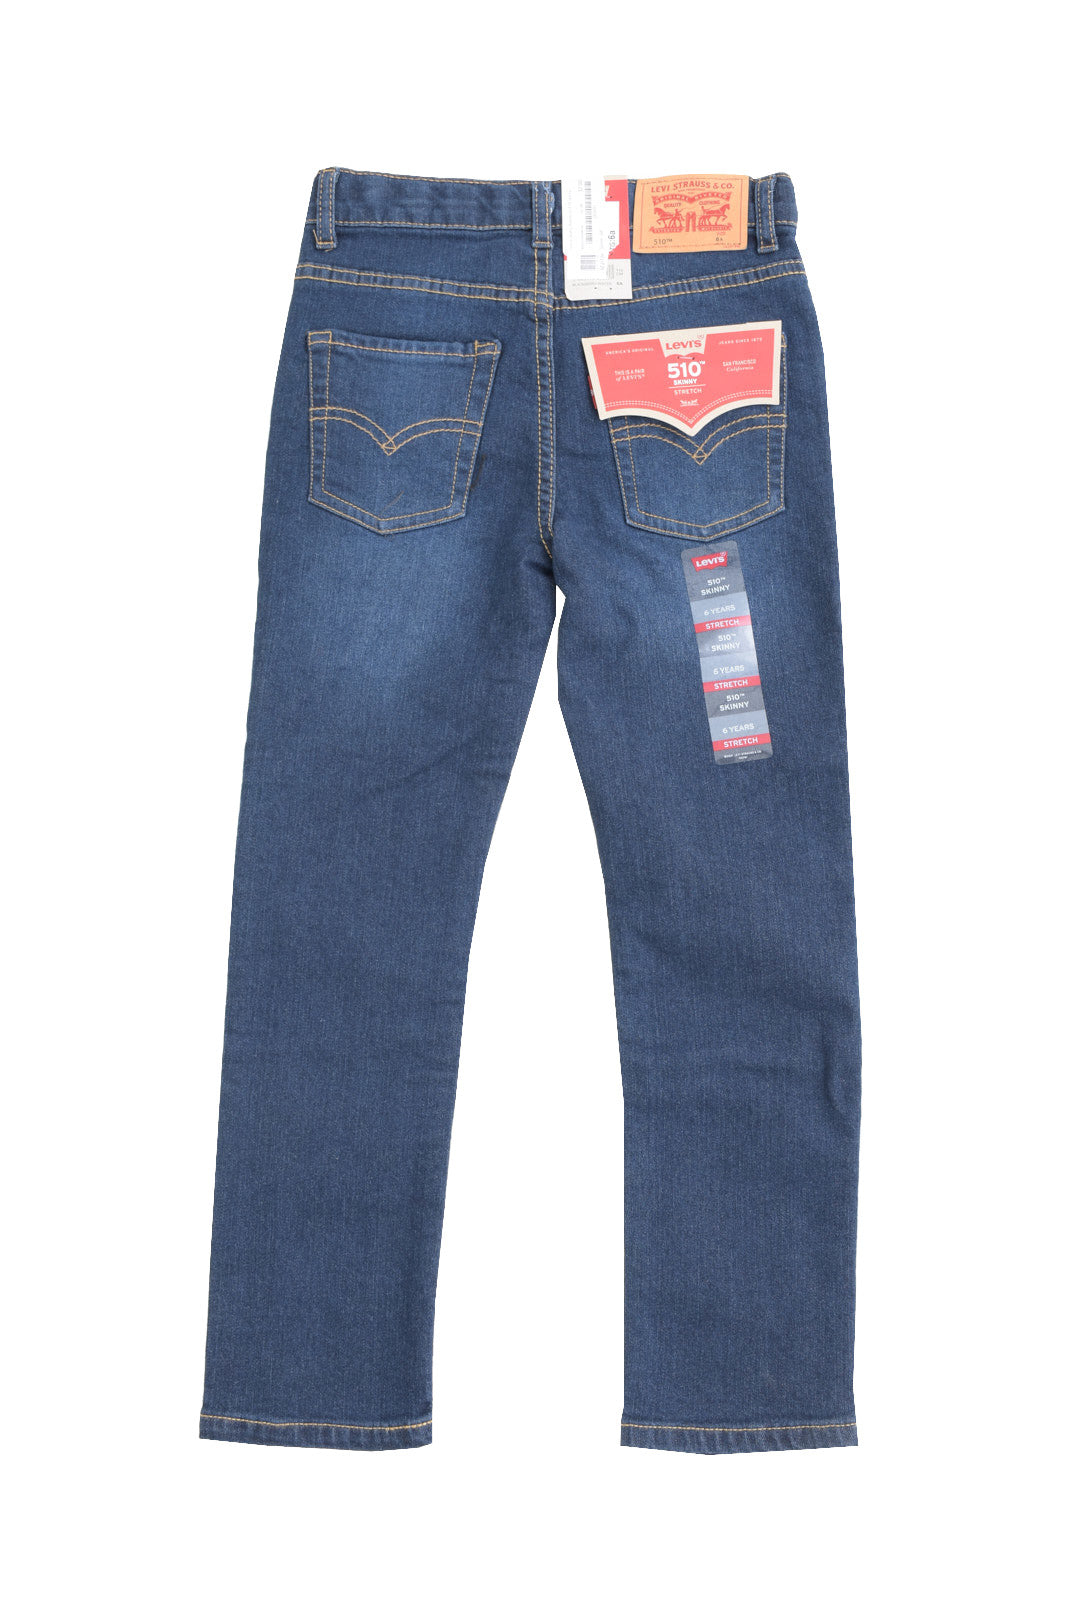 Levi's Jeans Bambino 510 skinny